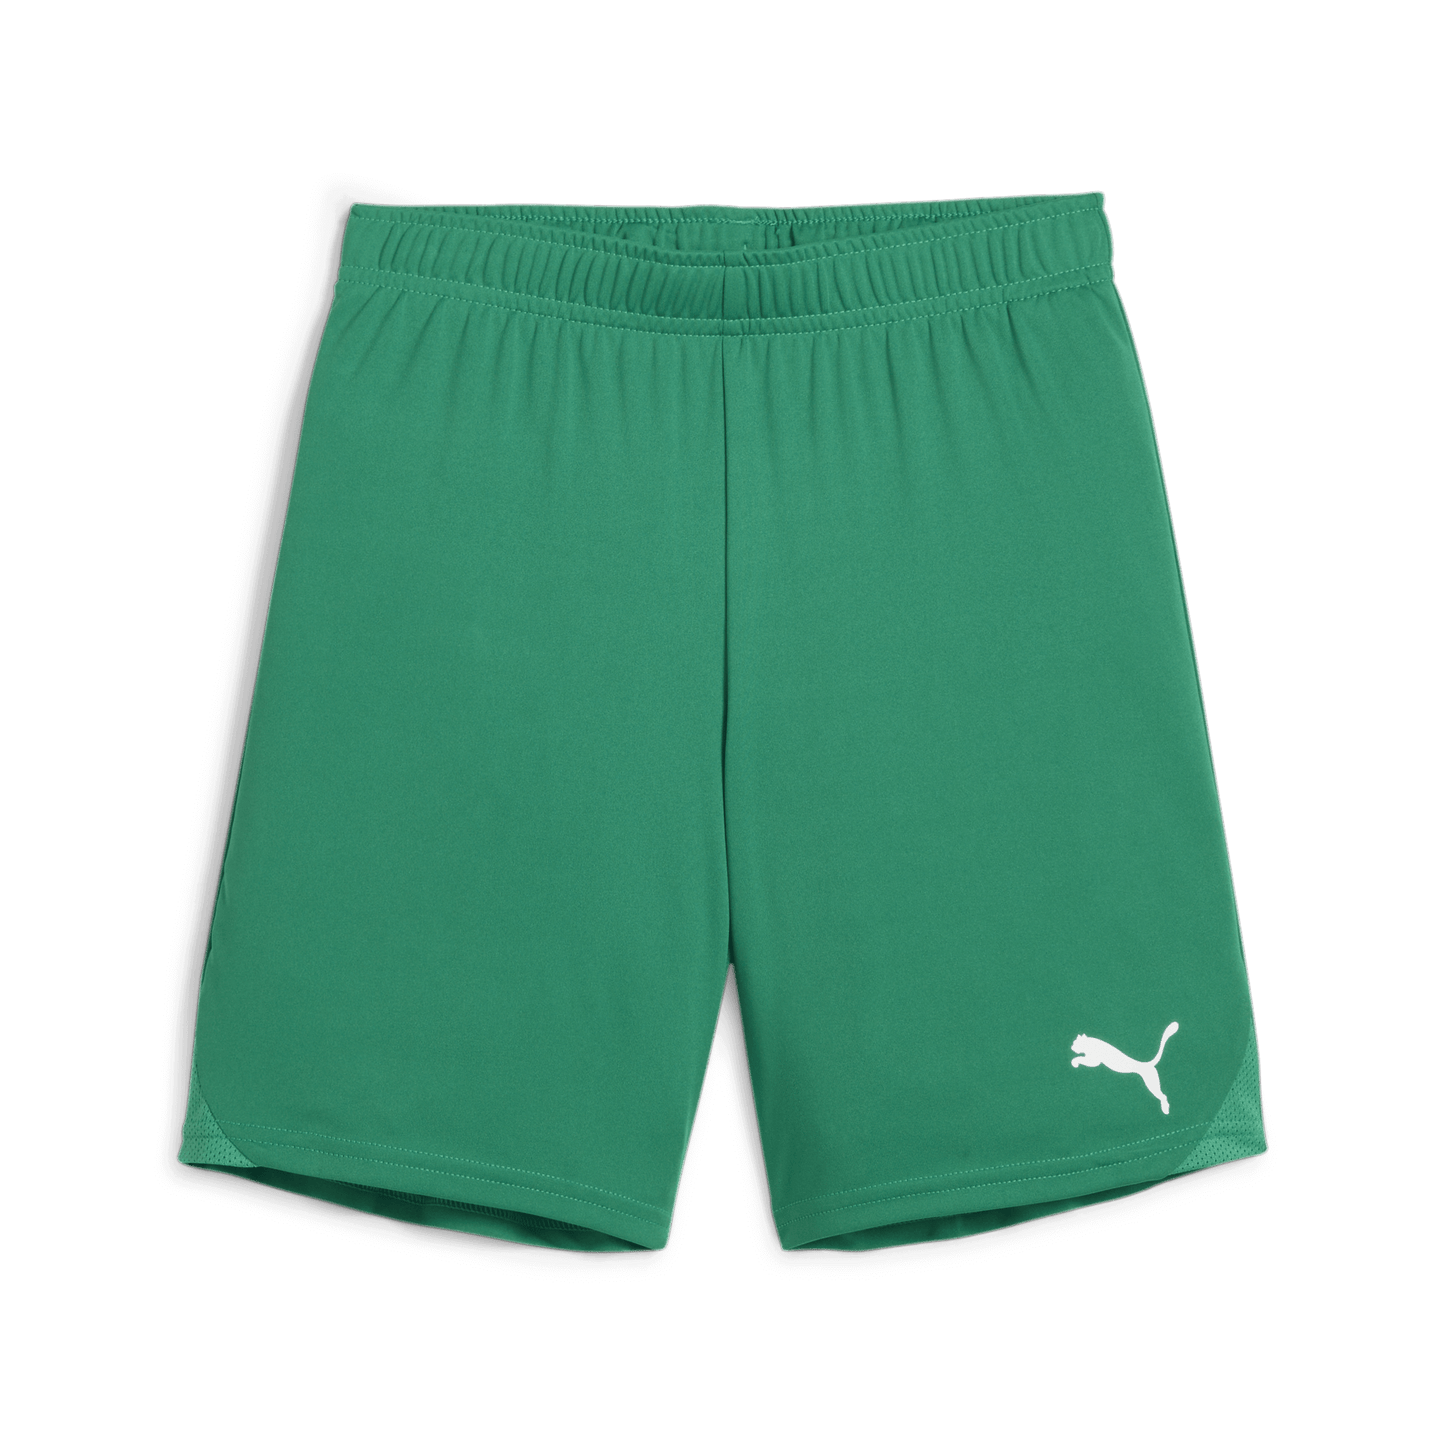 Puma YOUTH Team Goal Shorts-Sport Green-Puma White  